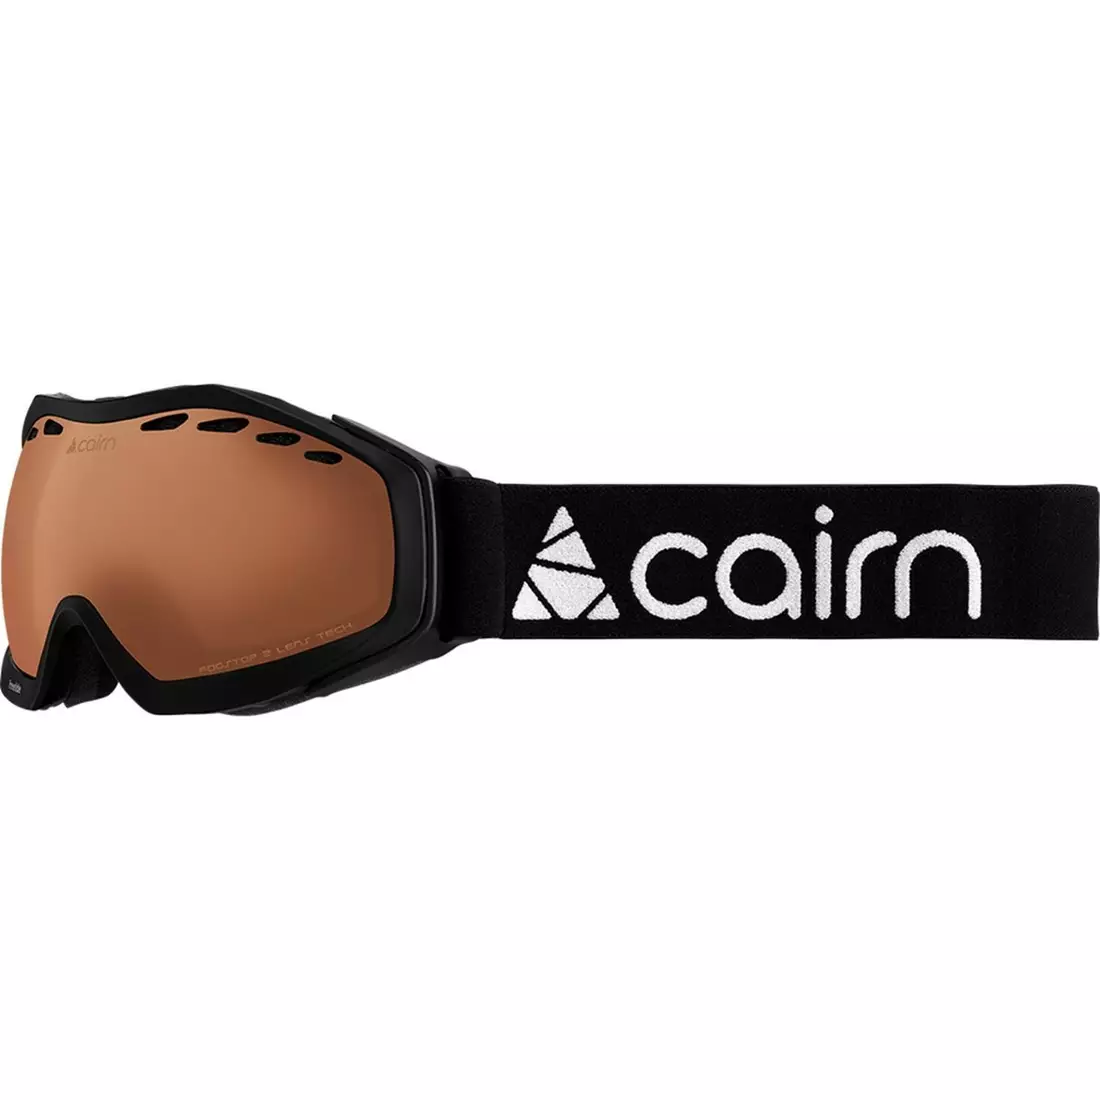 CAIRN ochelari de schi/snowboard FREERIDE 202 PHOTOCHROMIC, Black, 580068202